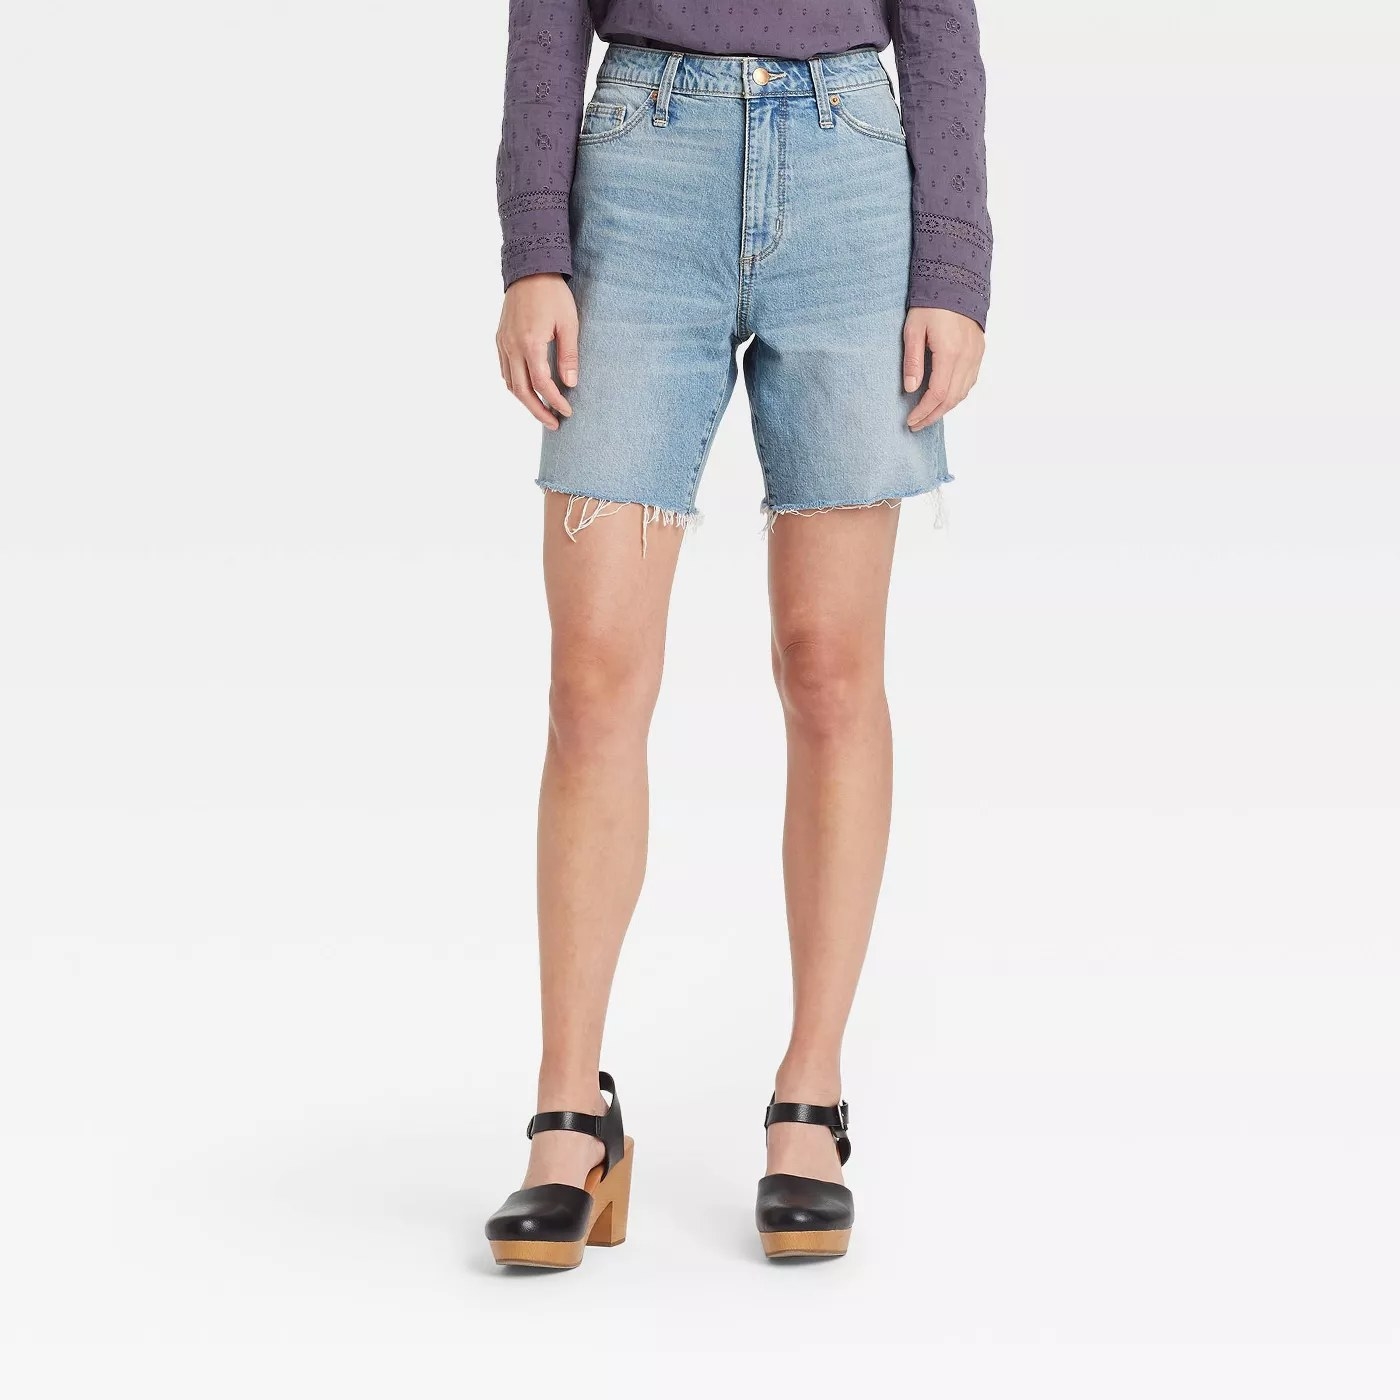 A model wearing the light blue cutoff jean shorts